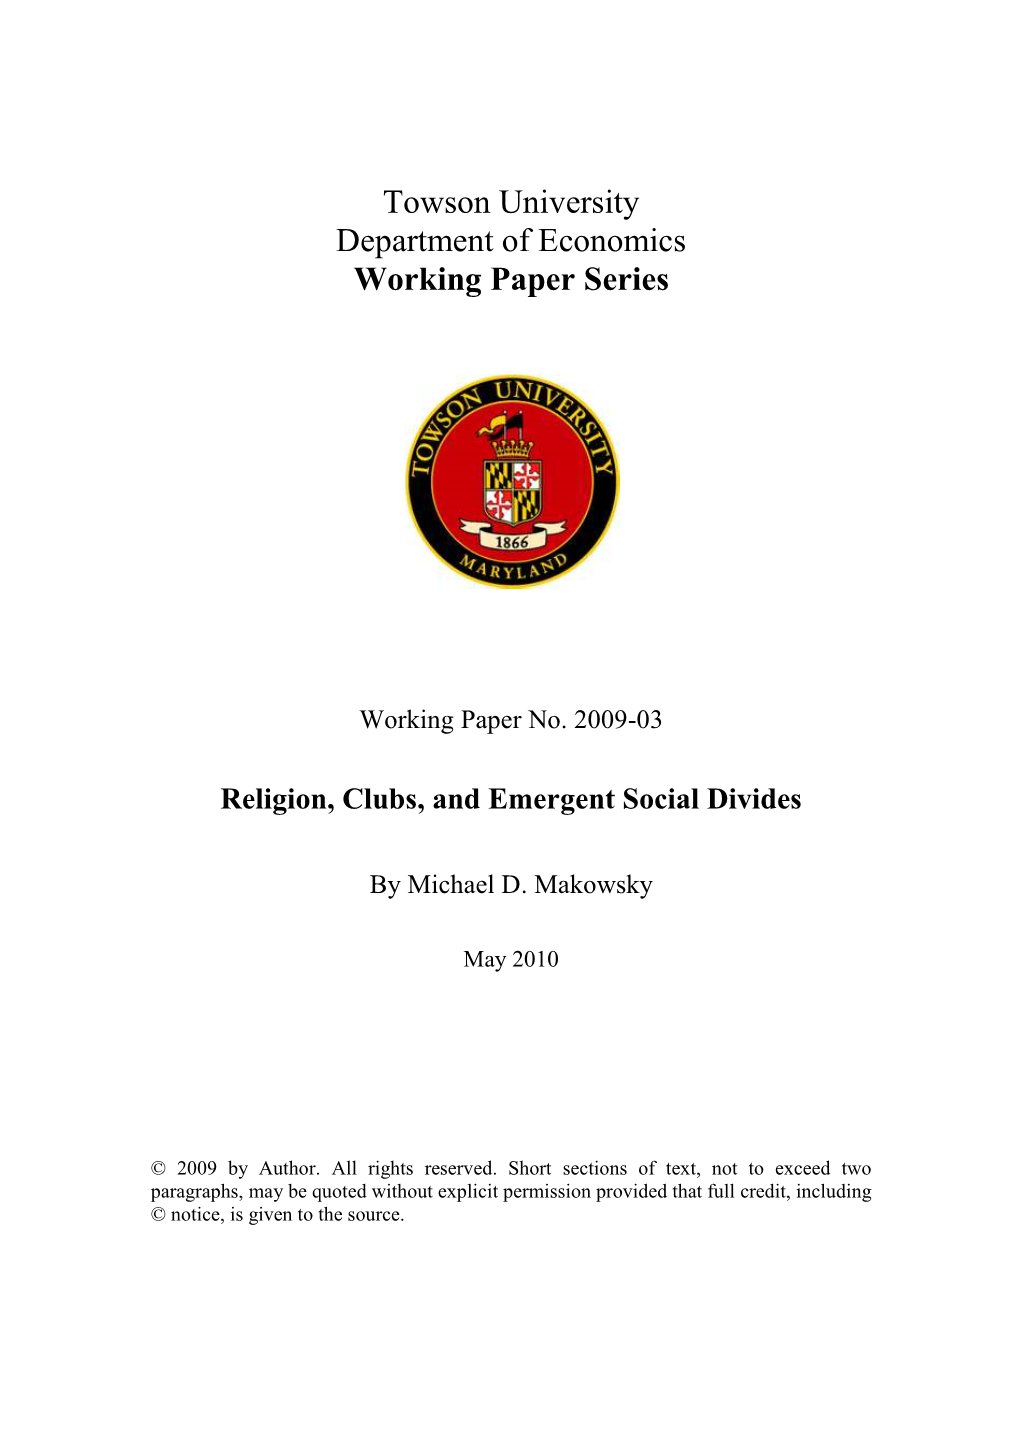 Towson University Department of Economics Working Paper Series